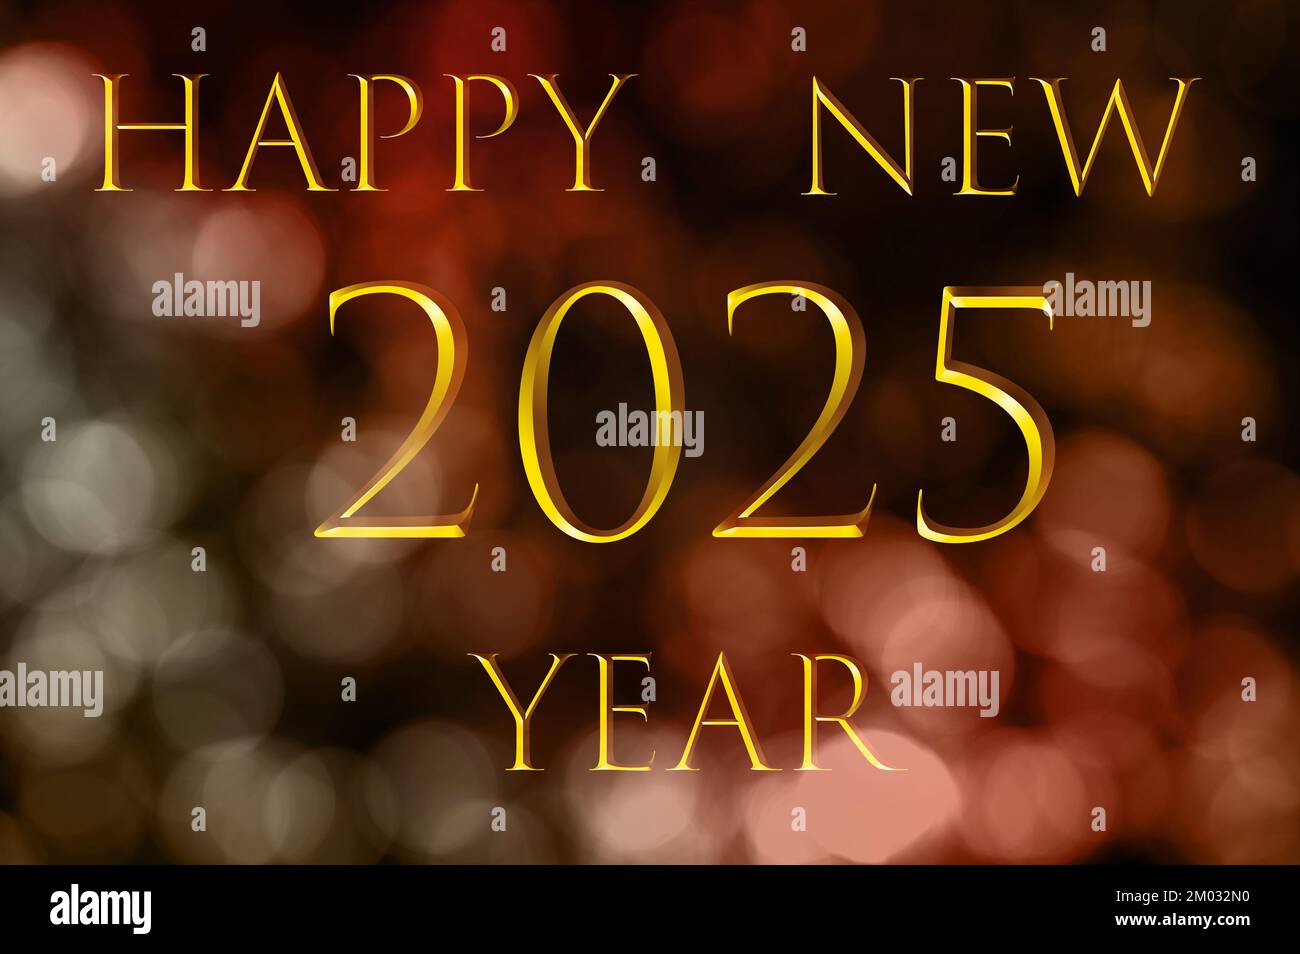 writing-happy-new-year-2025-stock-photo-alamy